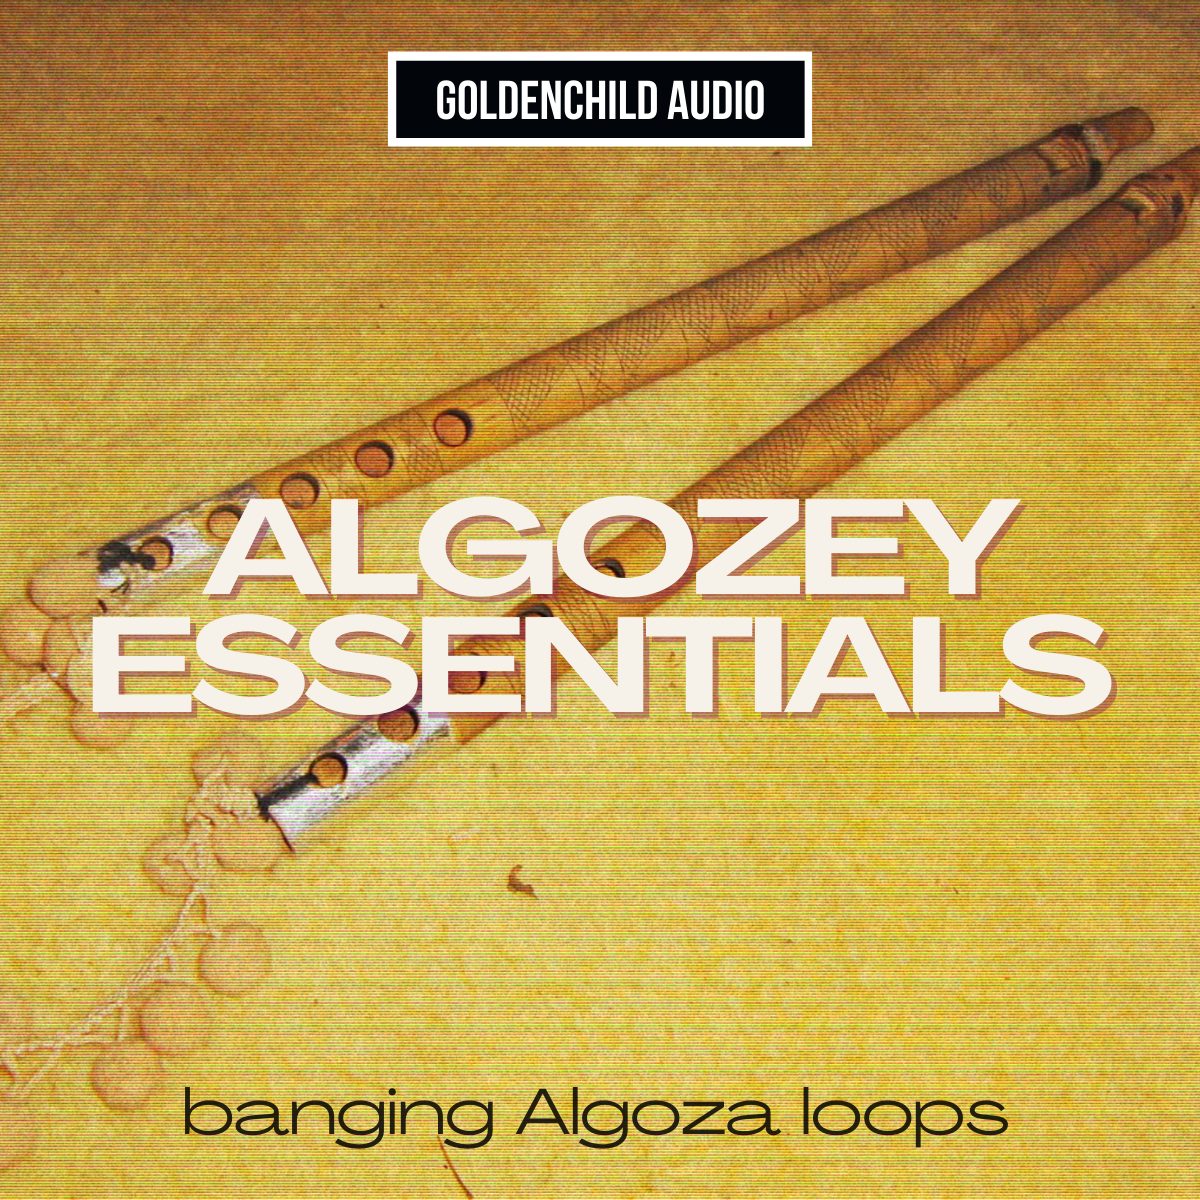 algozey essentials by goldenchild audio